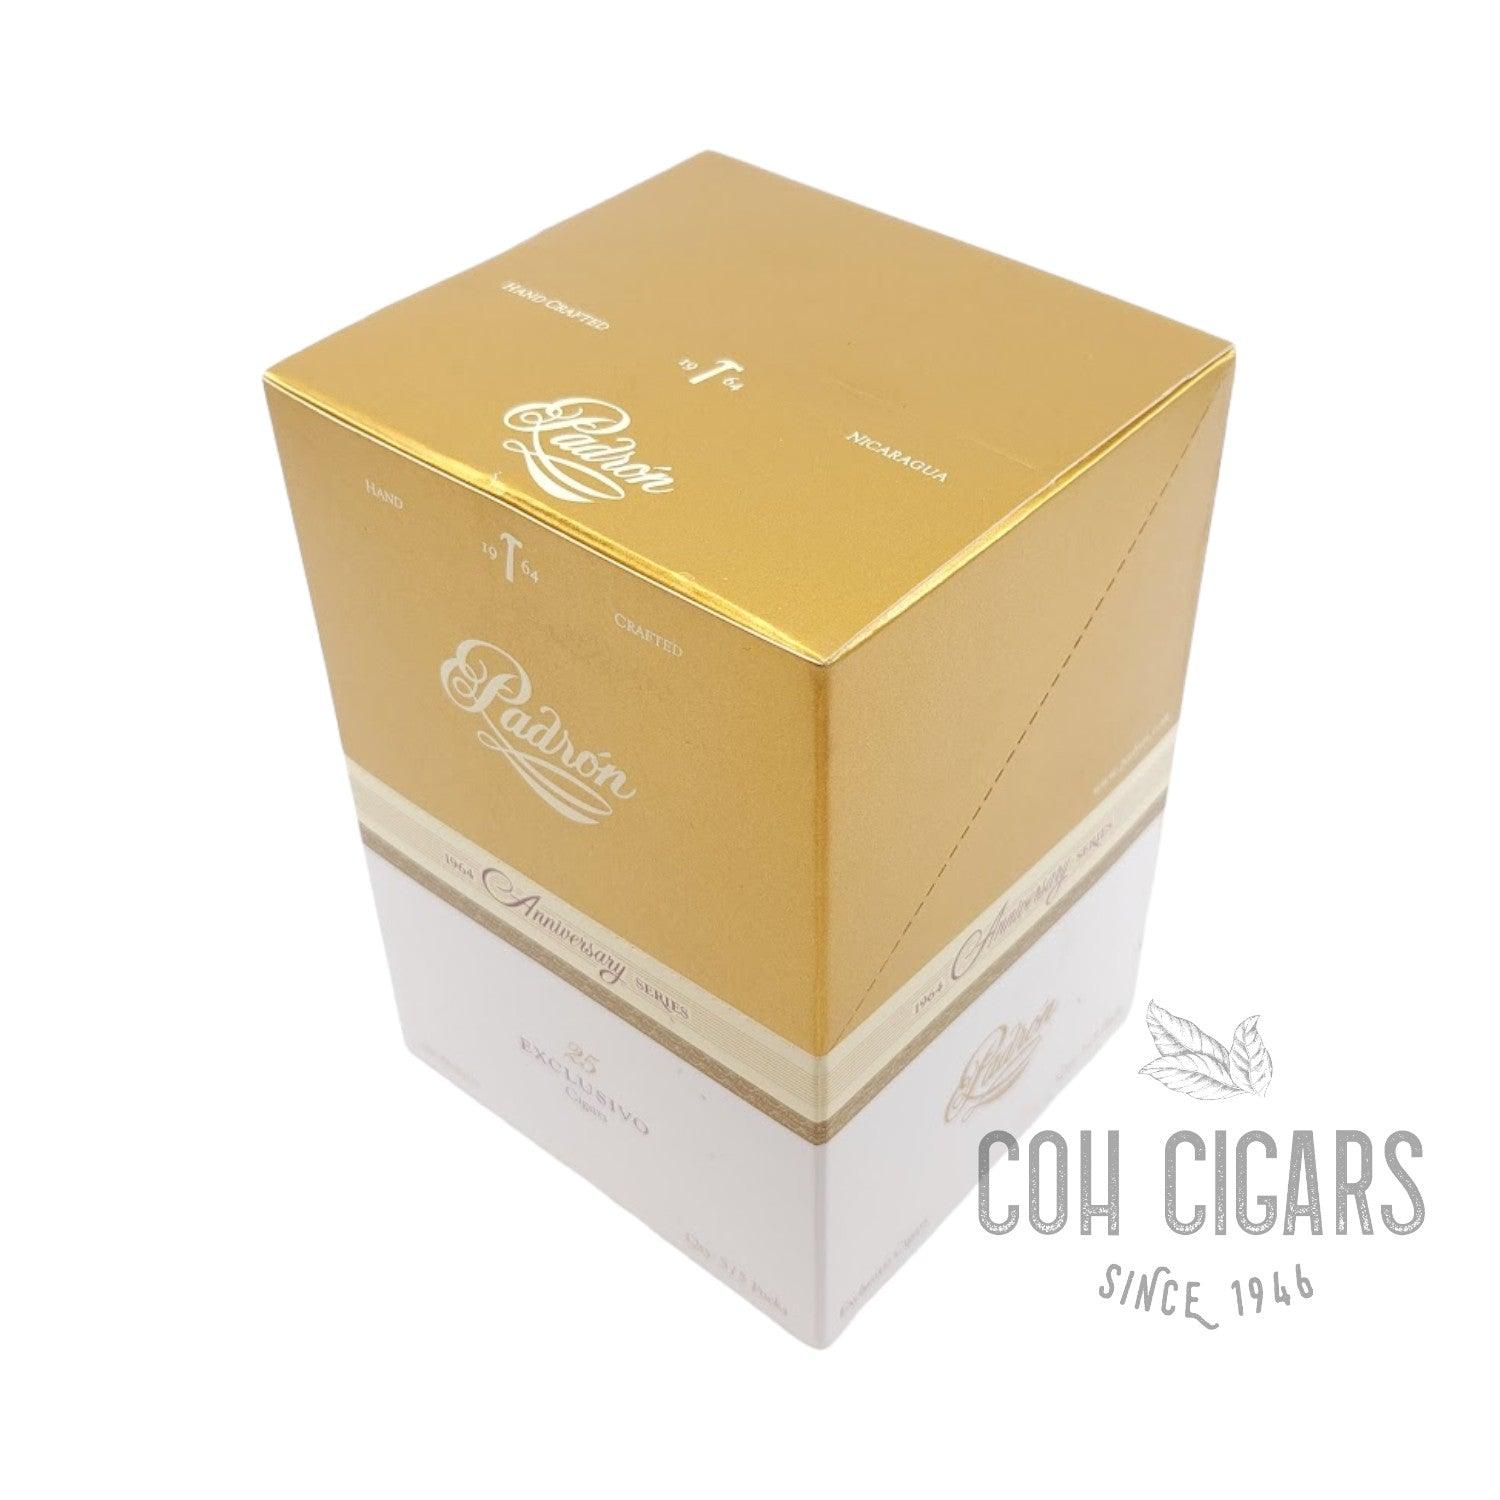 Padron Cigar | 1964 Anniversary Series Exclusivo Natural | Box 5x5 - hk.cohcigars